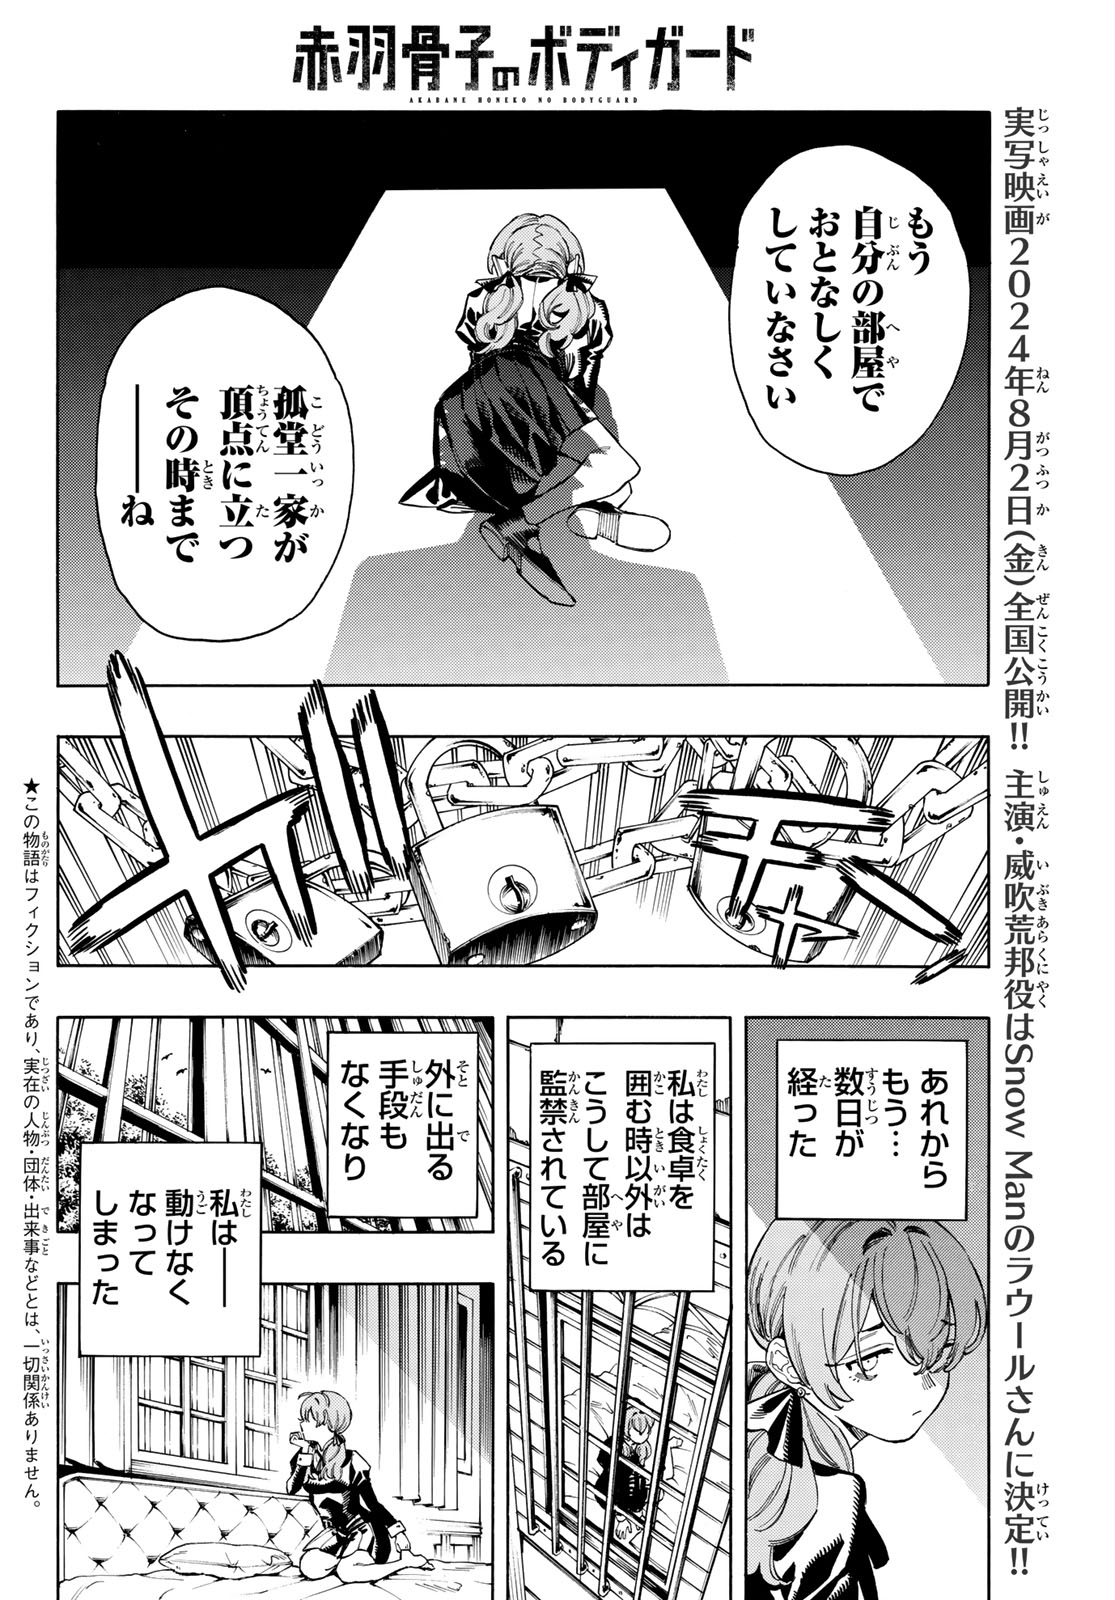 Akabane Honeko no Bodyguard - Chapter 72 - Page 2